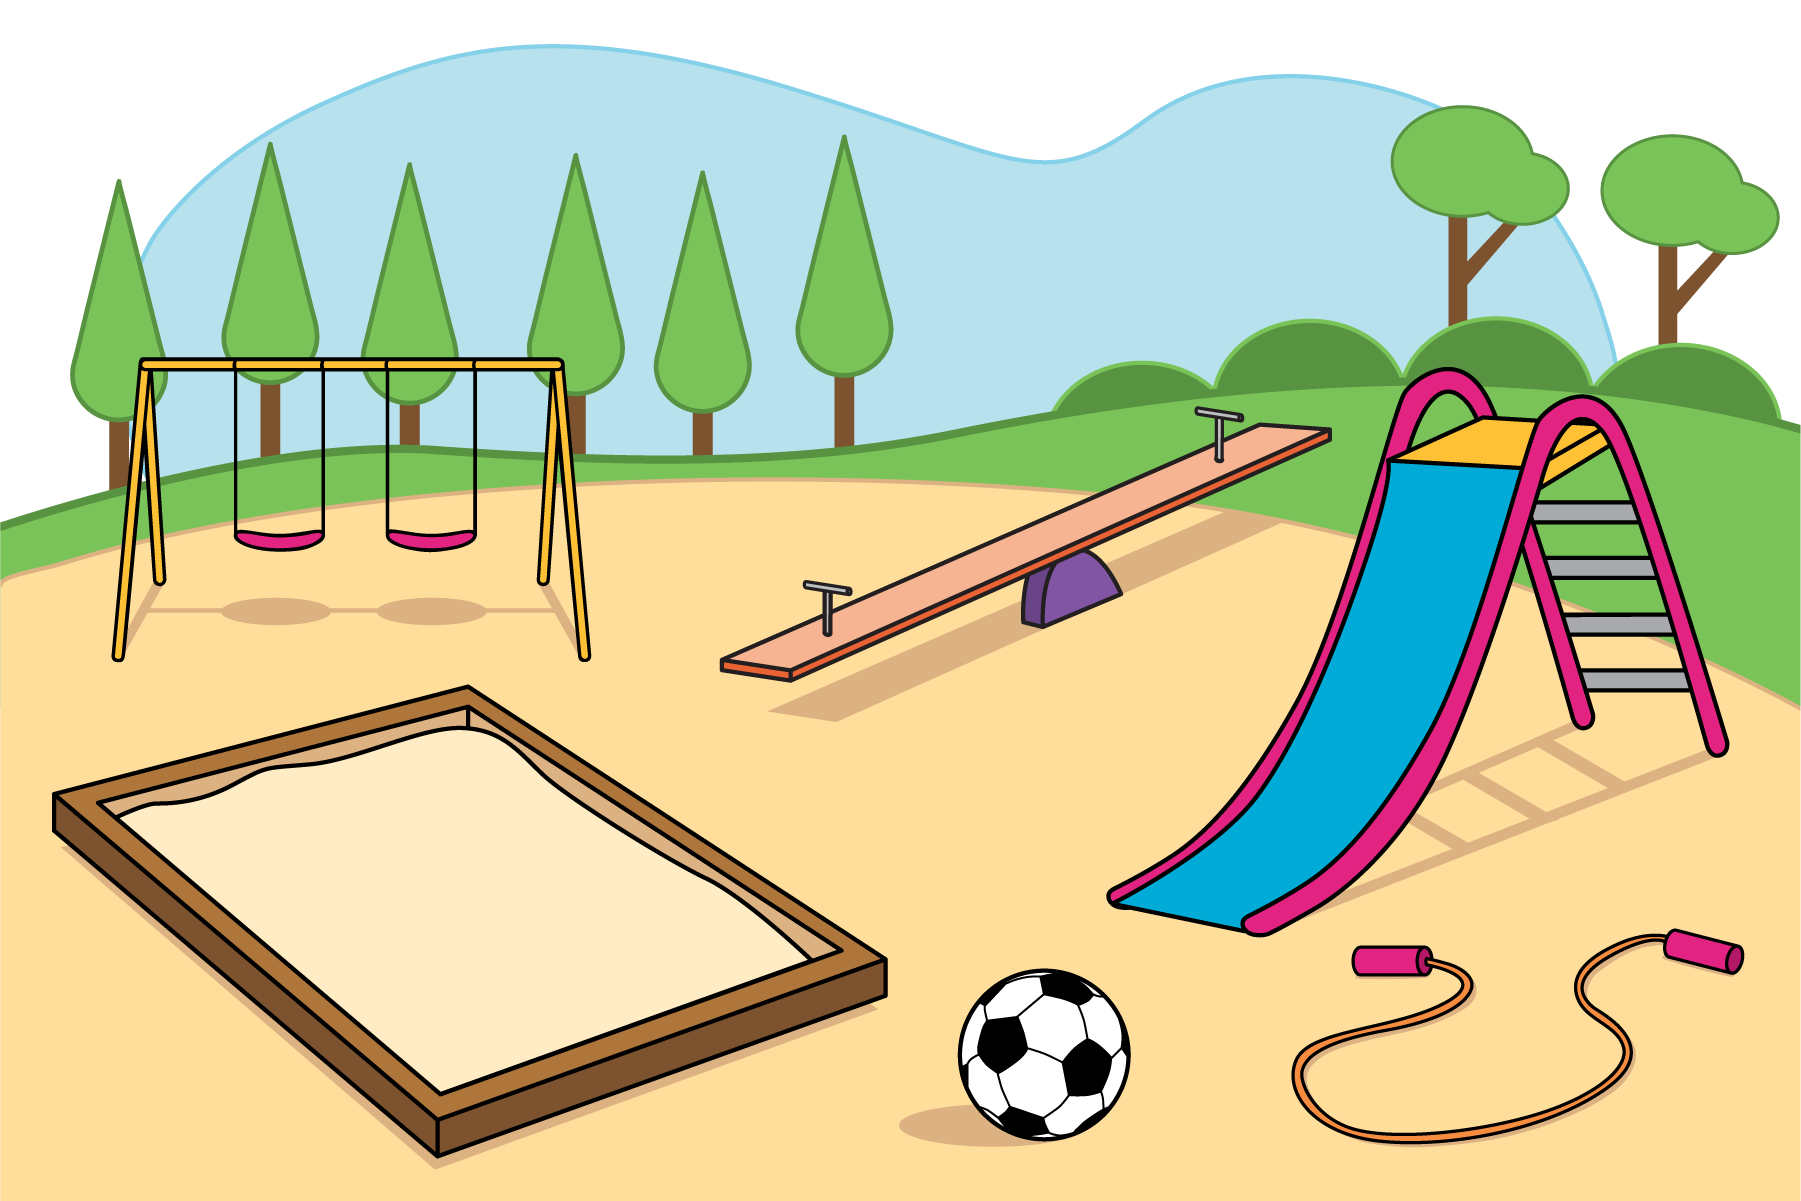 Playground. Swings, sandbox, seesaw, slide, jumprope, soccer ball.